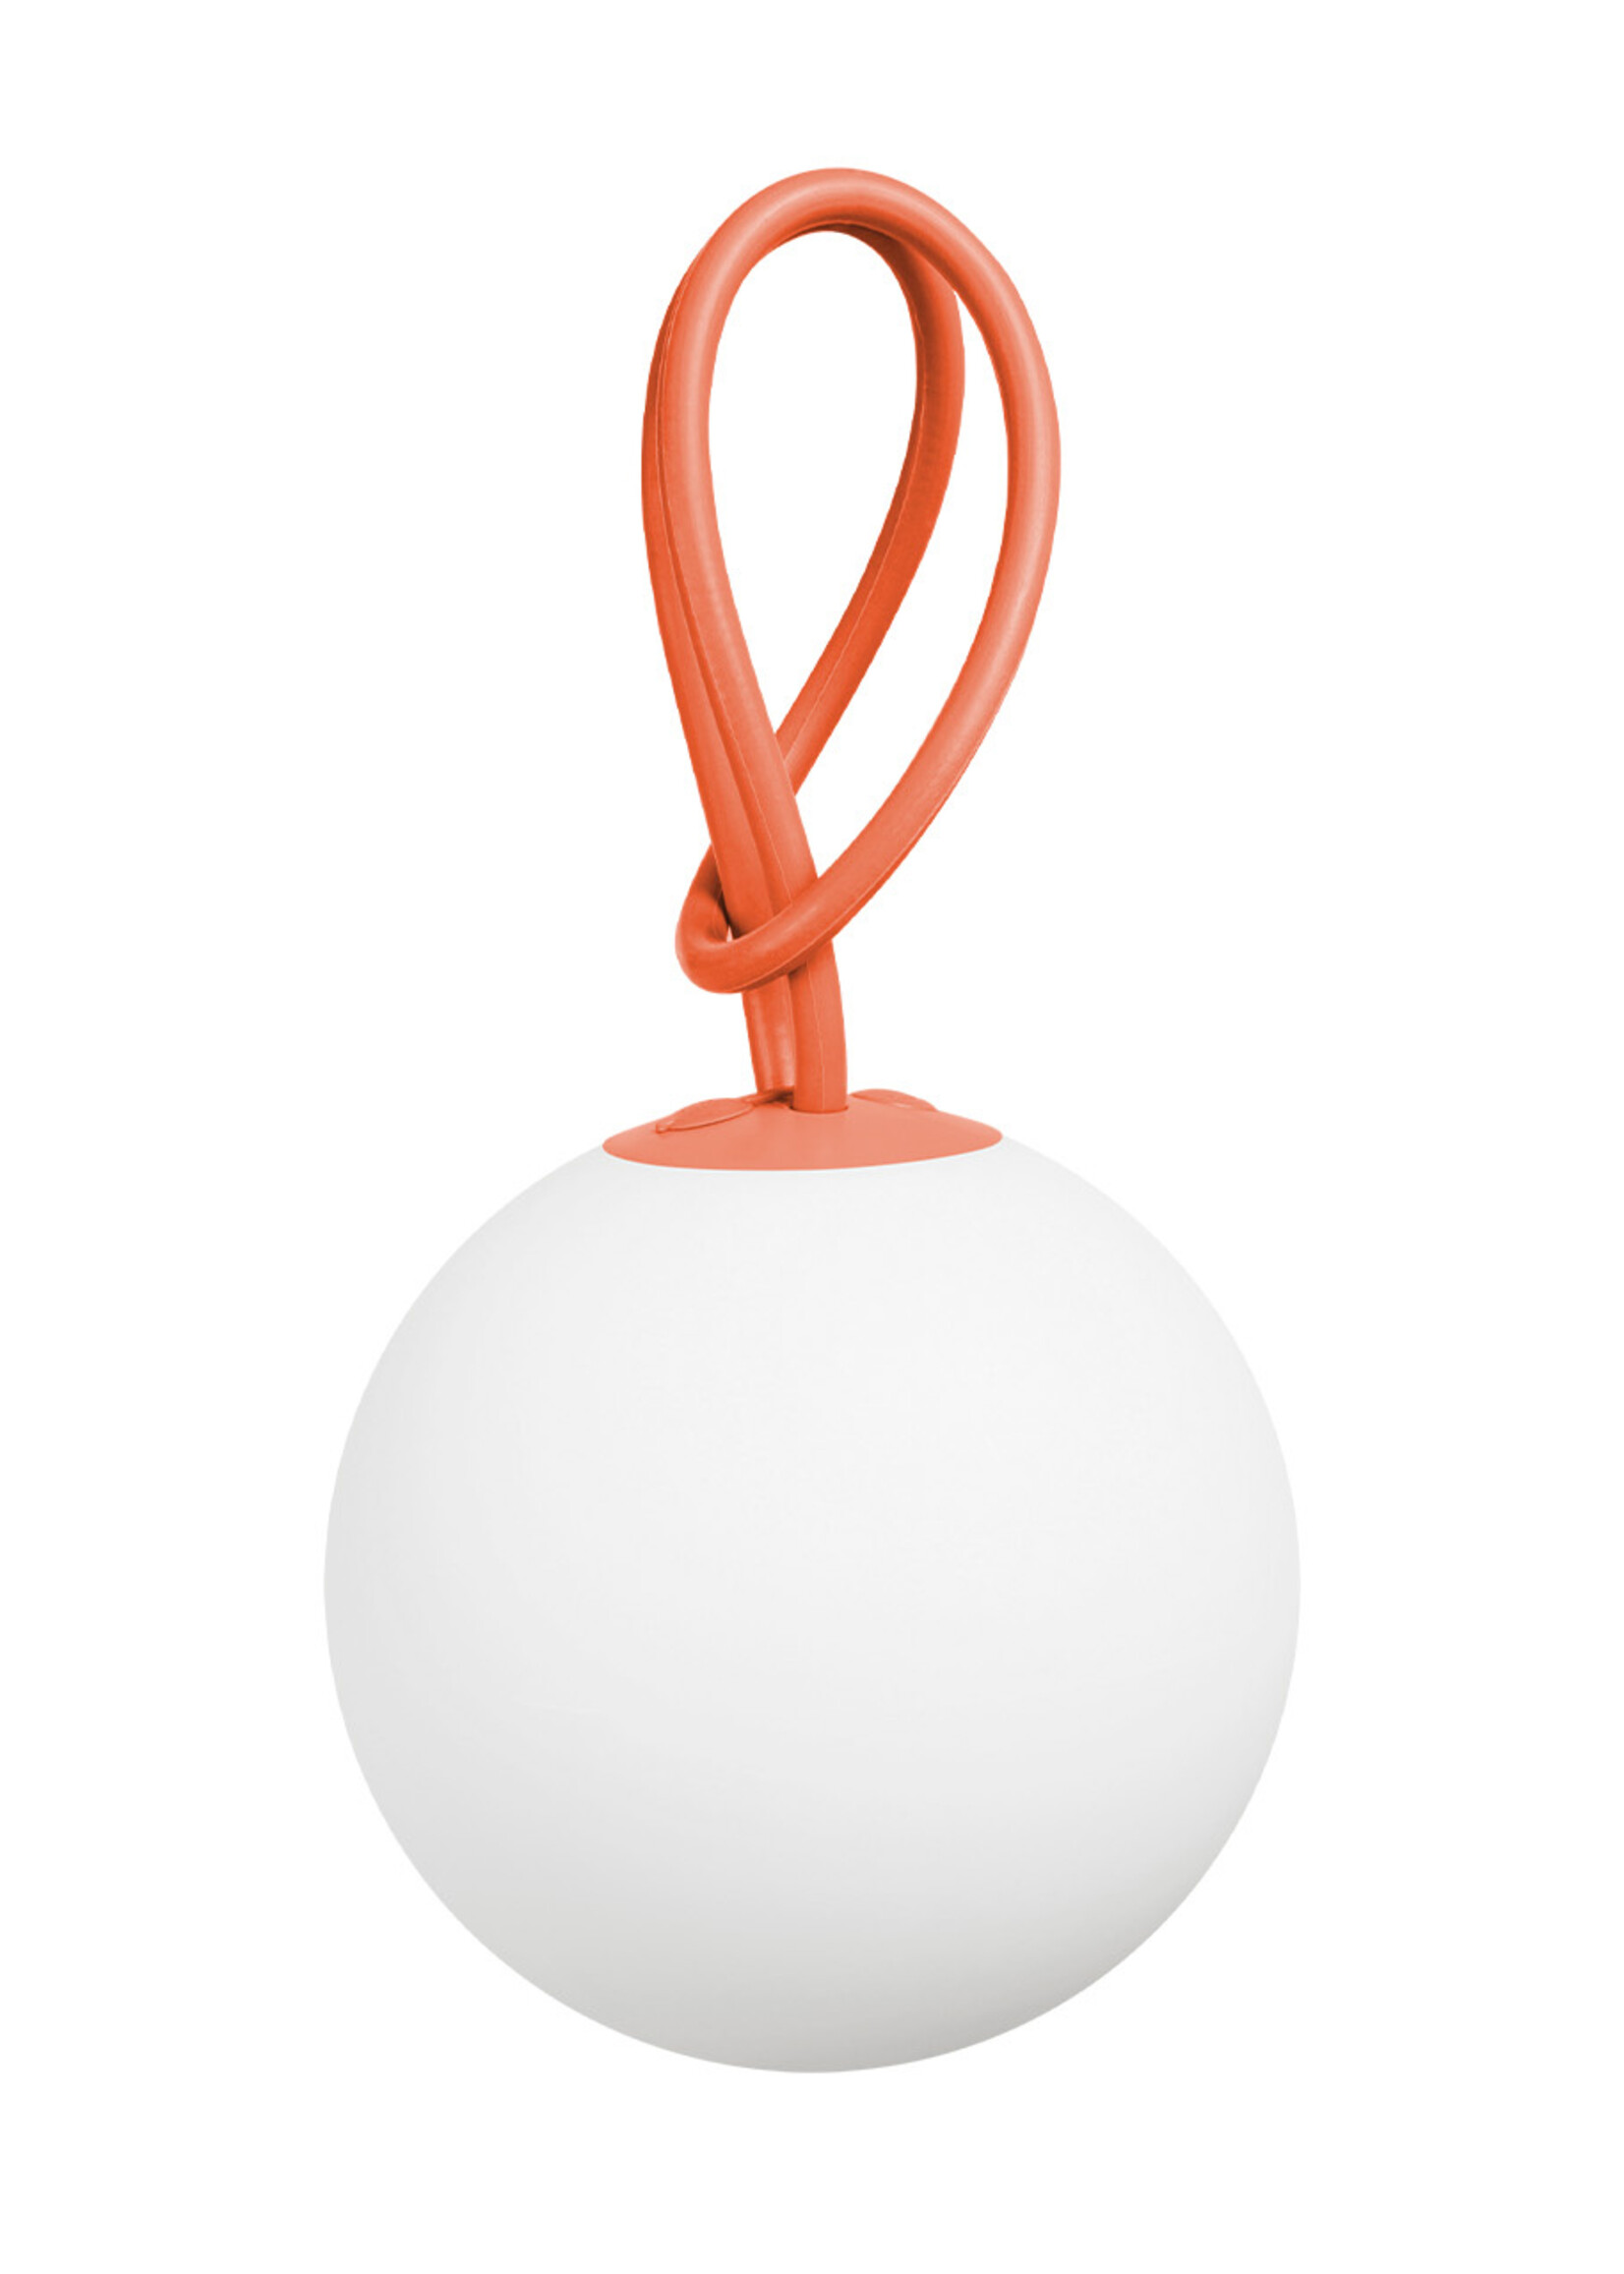 Fatboy - Bolleke - Lampe suspendue - Rechargeable - Tangerine (orange tangerine)